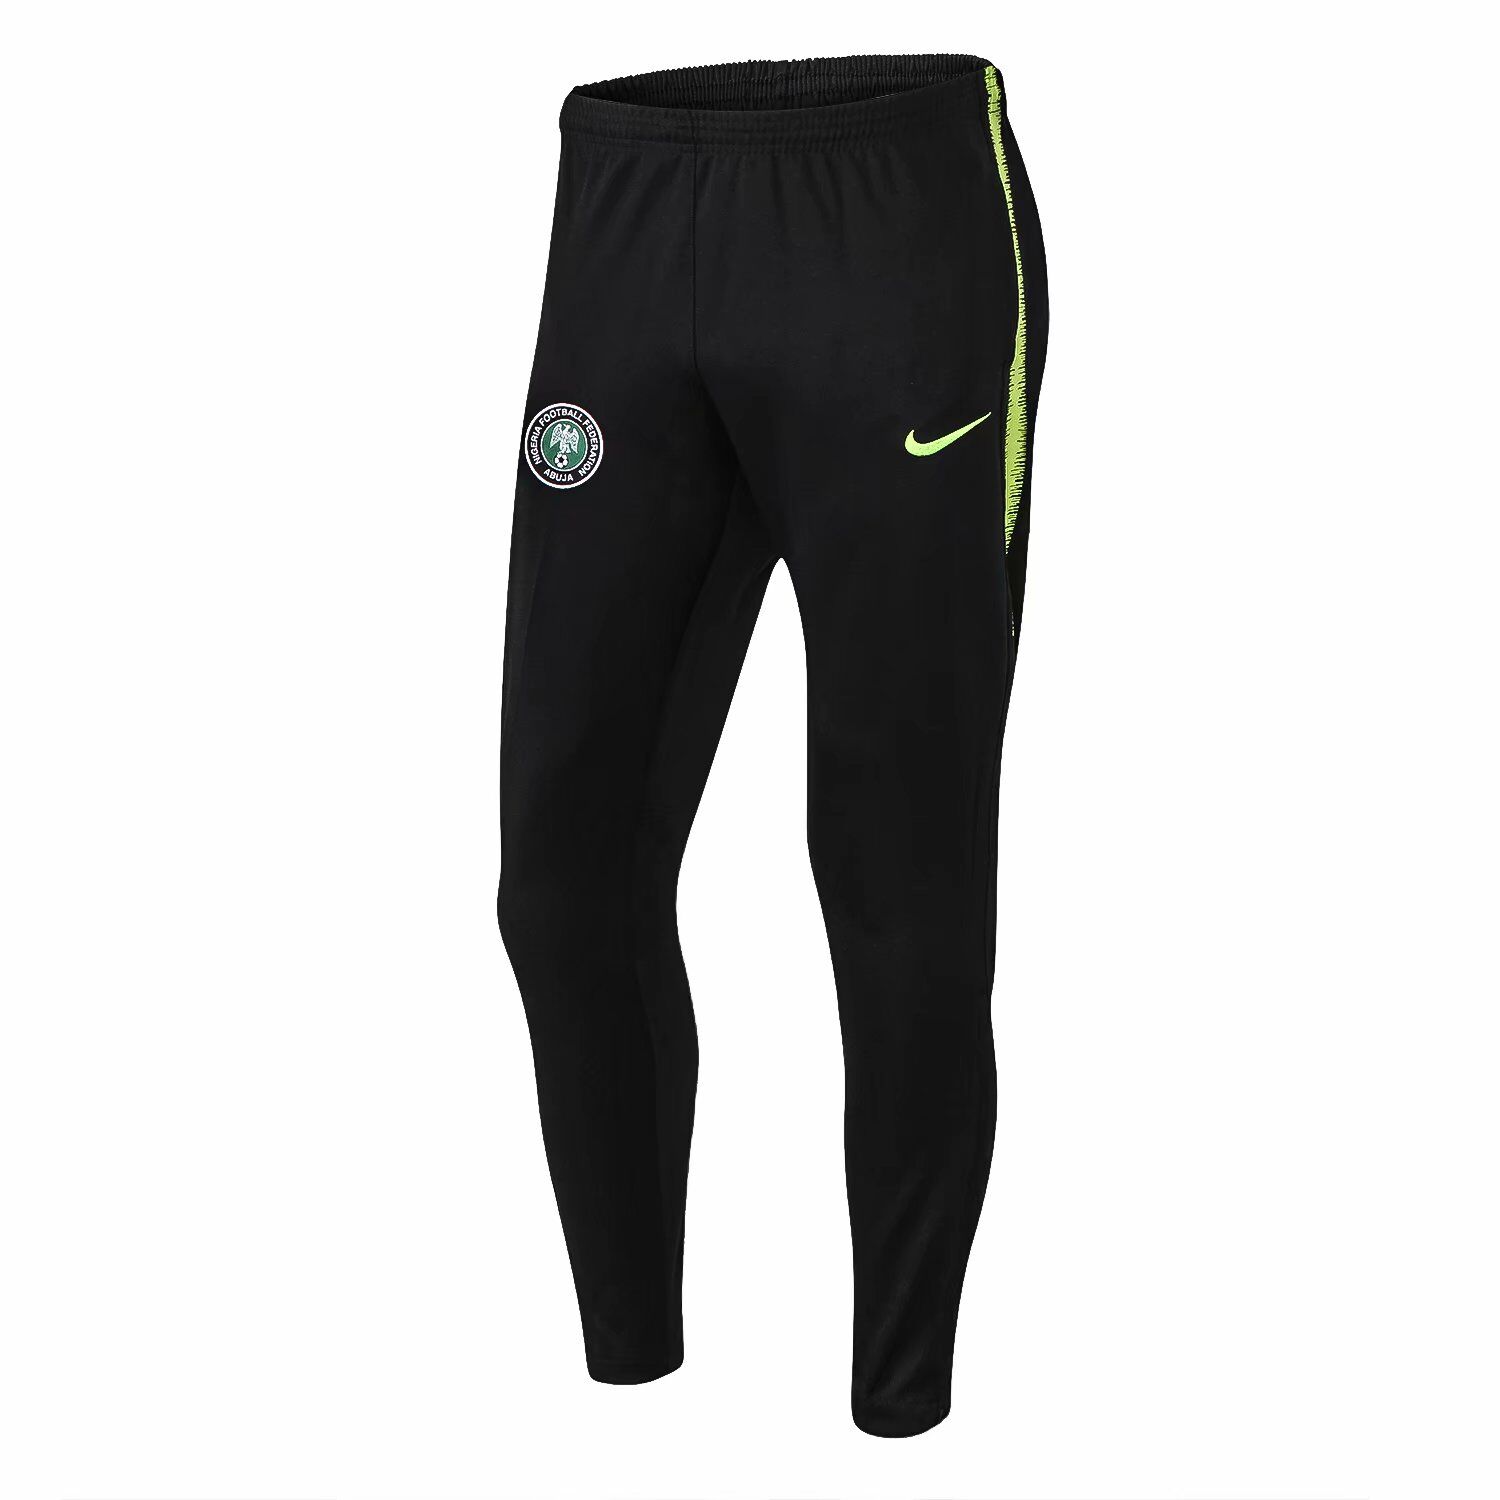 Pants Sport Gear,Pants Soccer Uniforms,Pants Soccer Jerseys,Pants ...